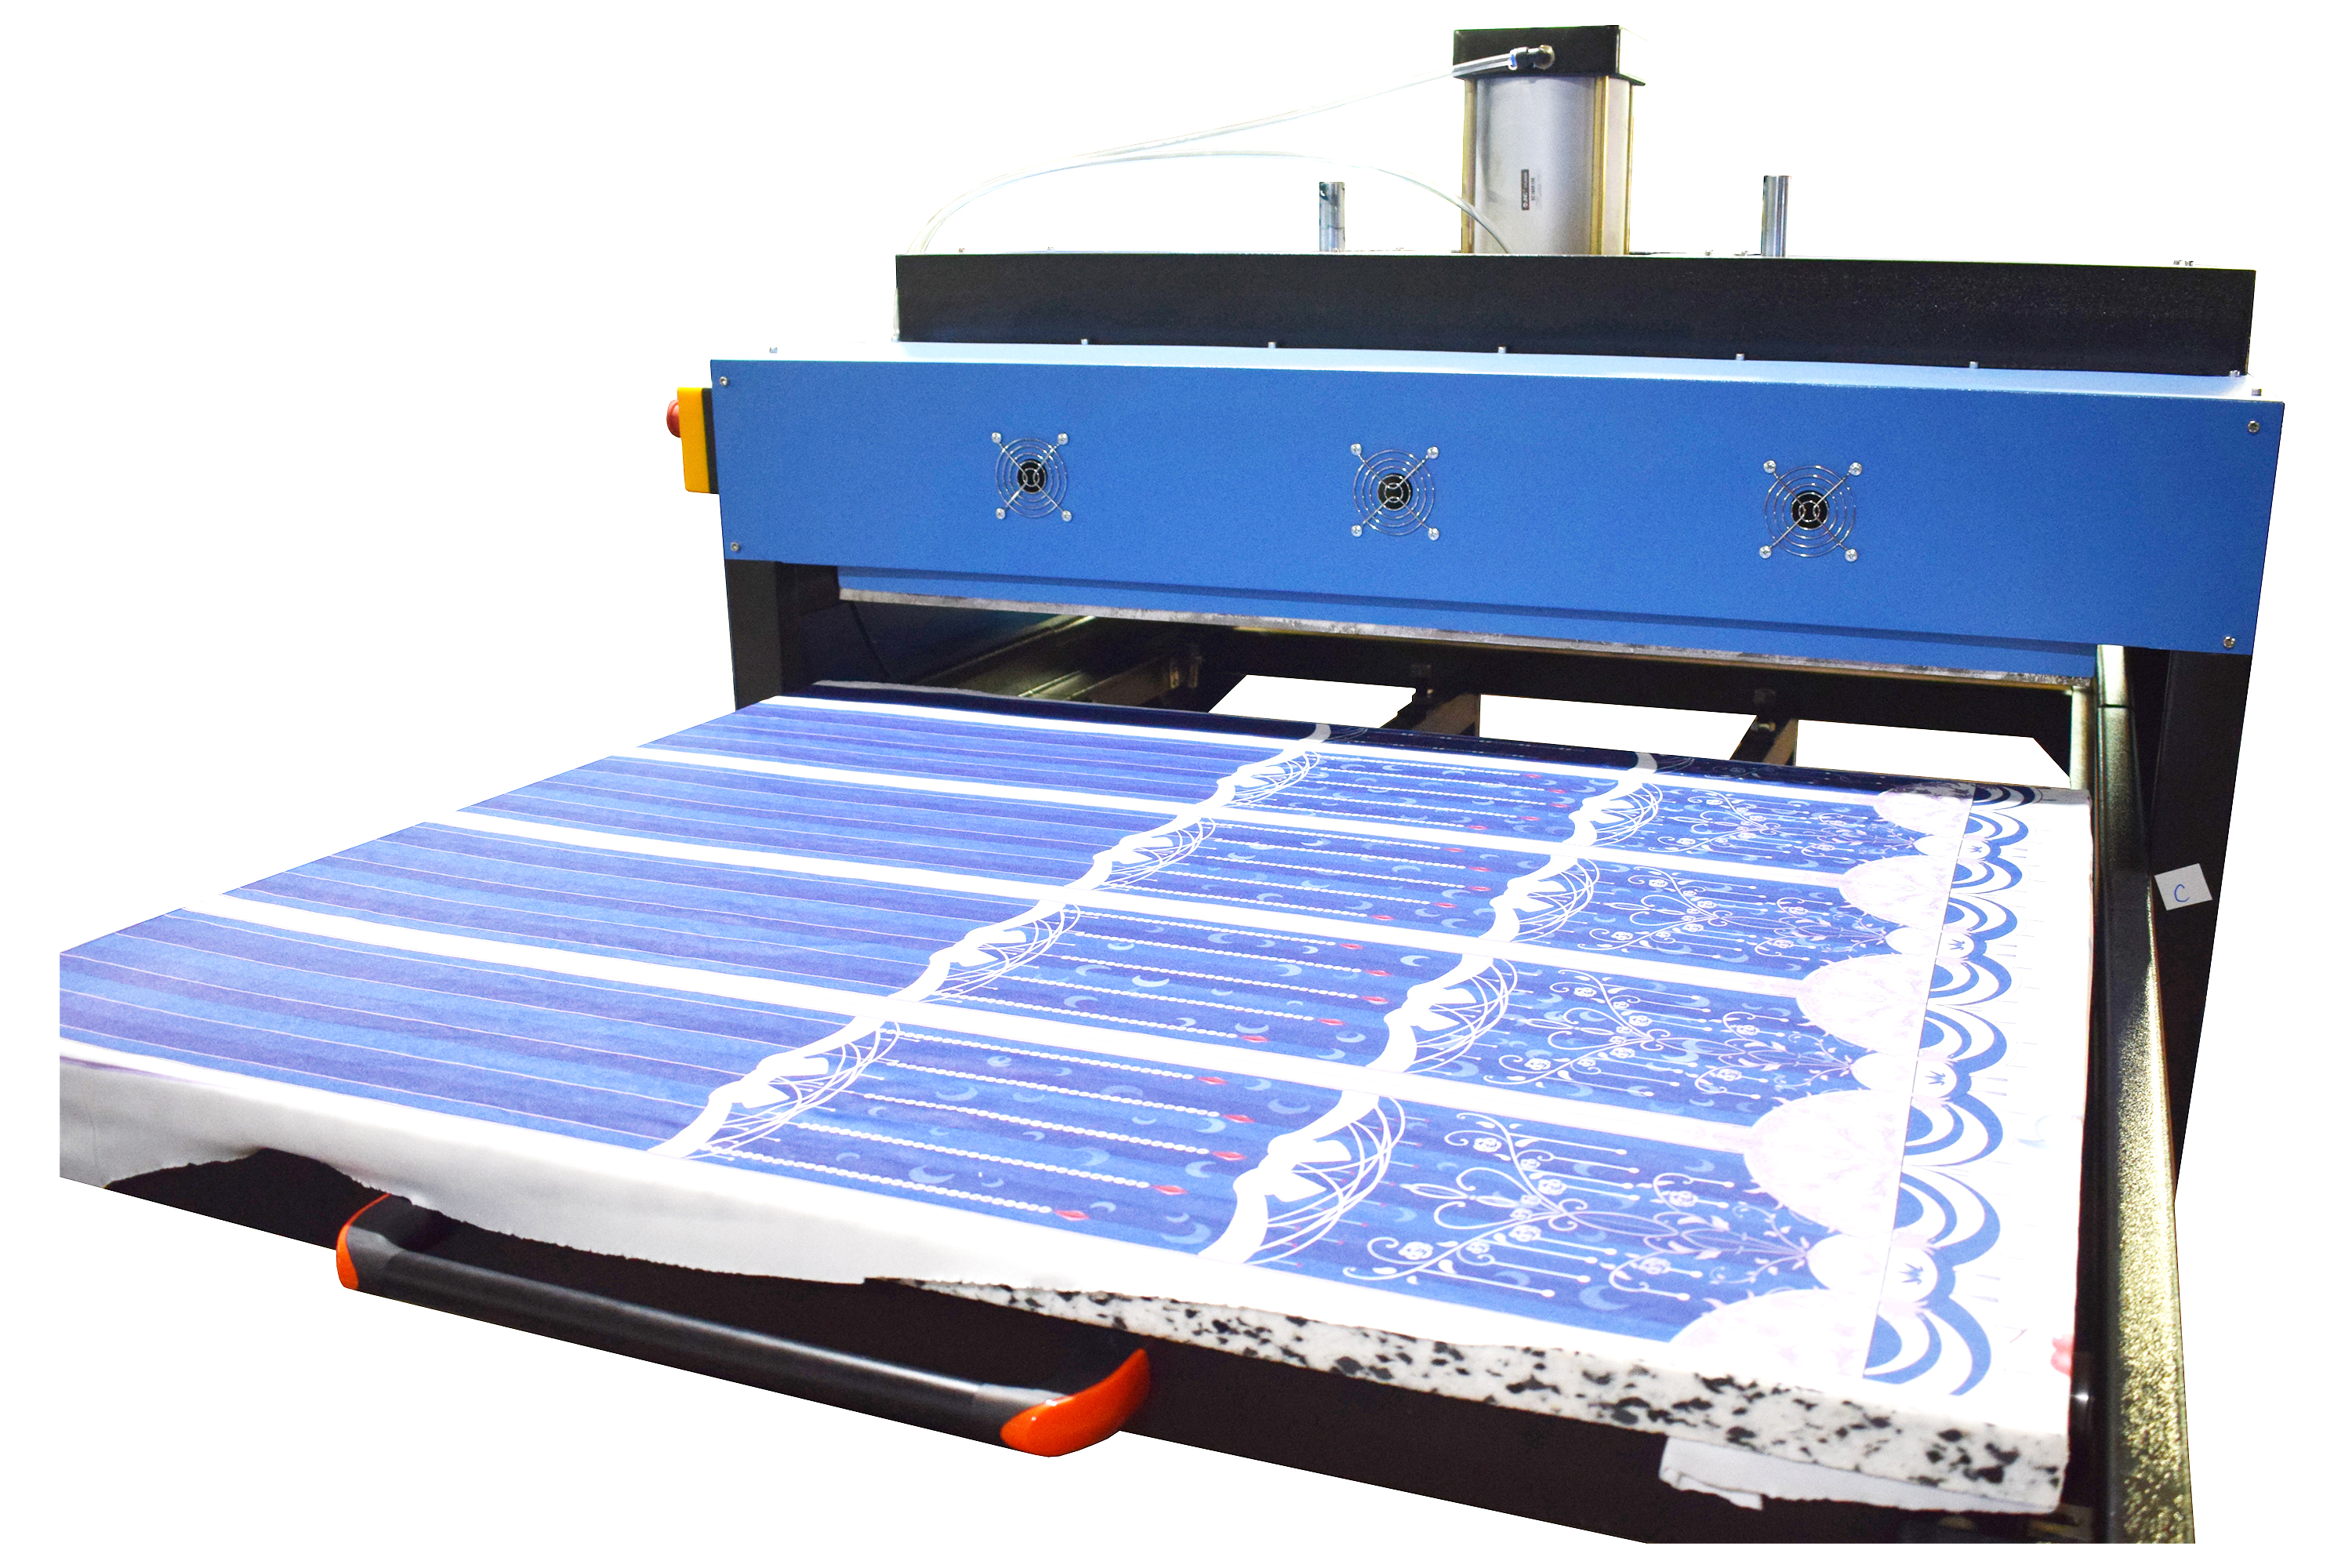 39′′ x 47′′ Large Format Heat Press Machine Dual Platen Pneumatic Heat Press Machine 220V 3 Phase